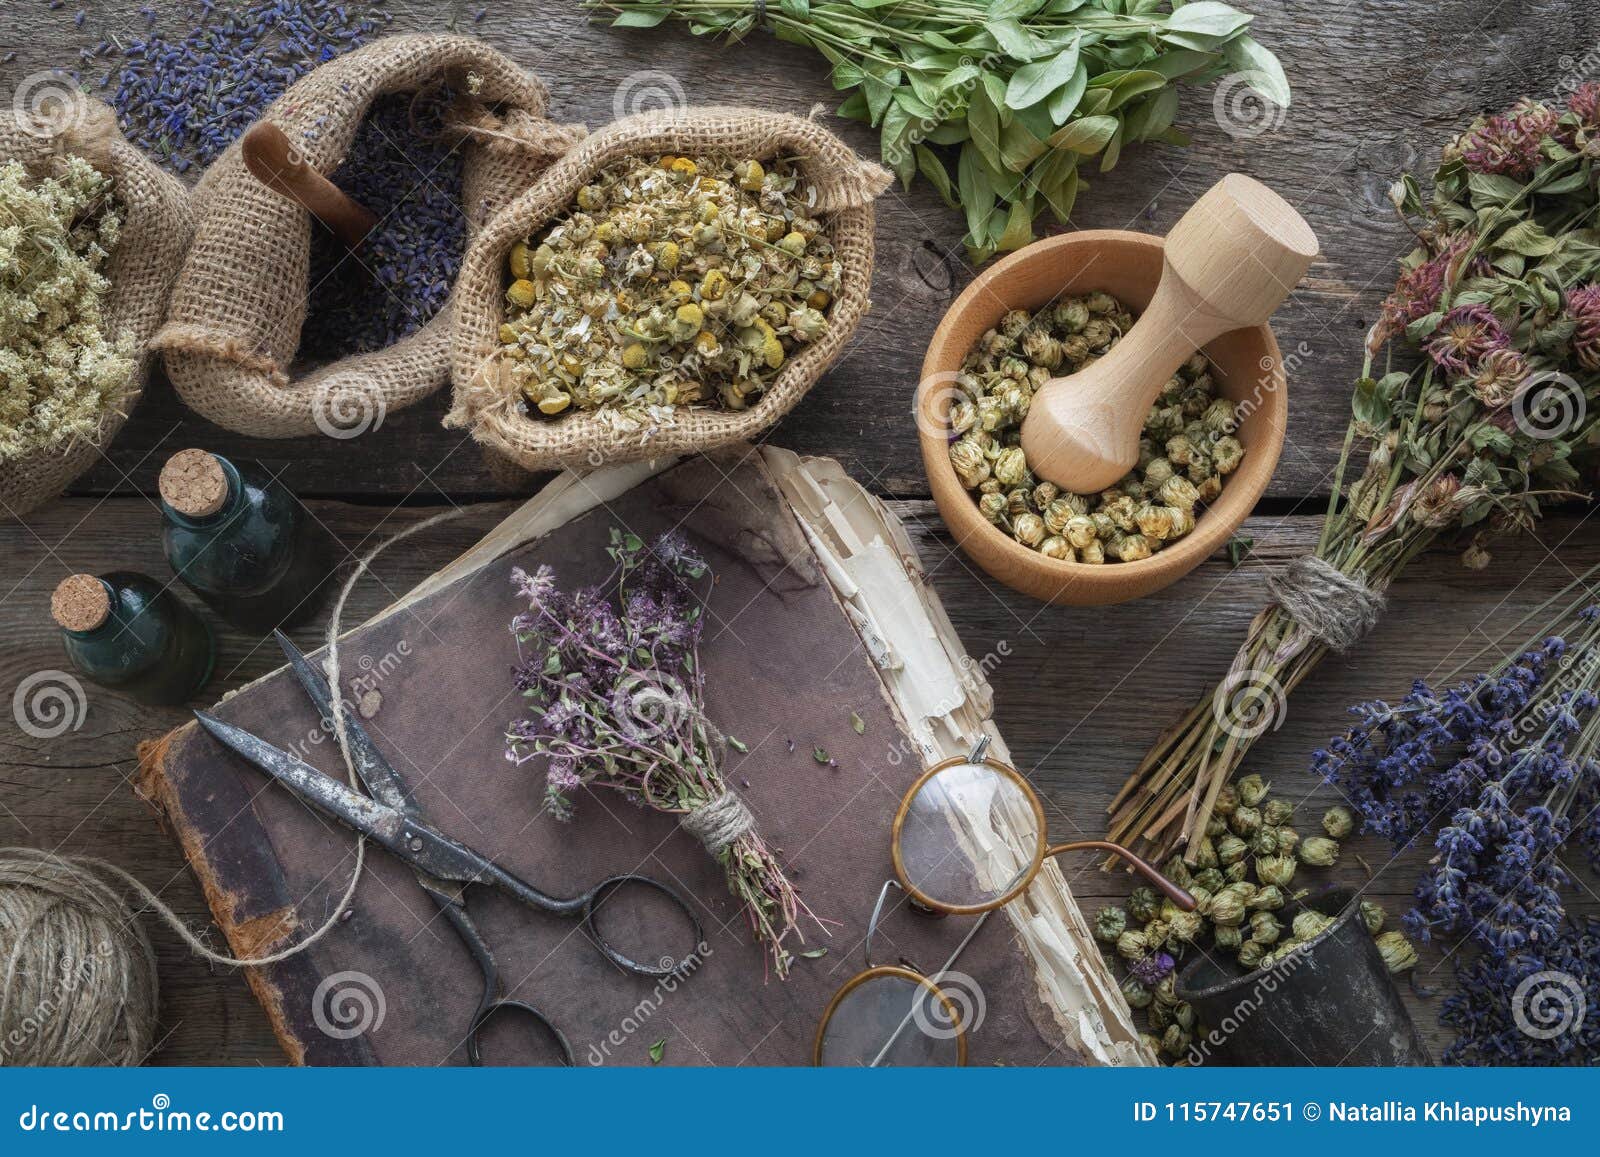 book, eyeglasses, tincture bottles, assortment of dry healthy herbs, mortar. herbal medicine. top view.